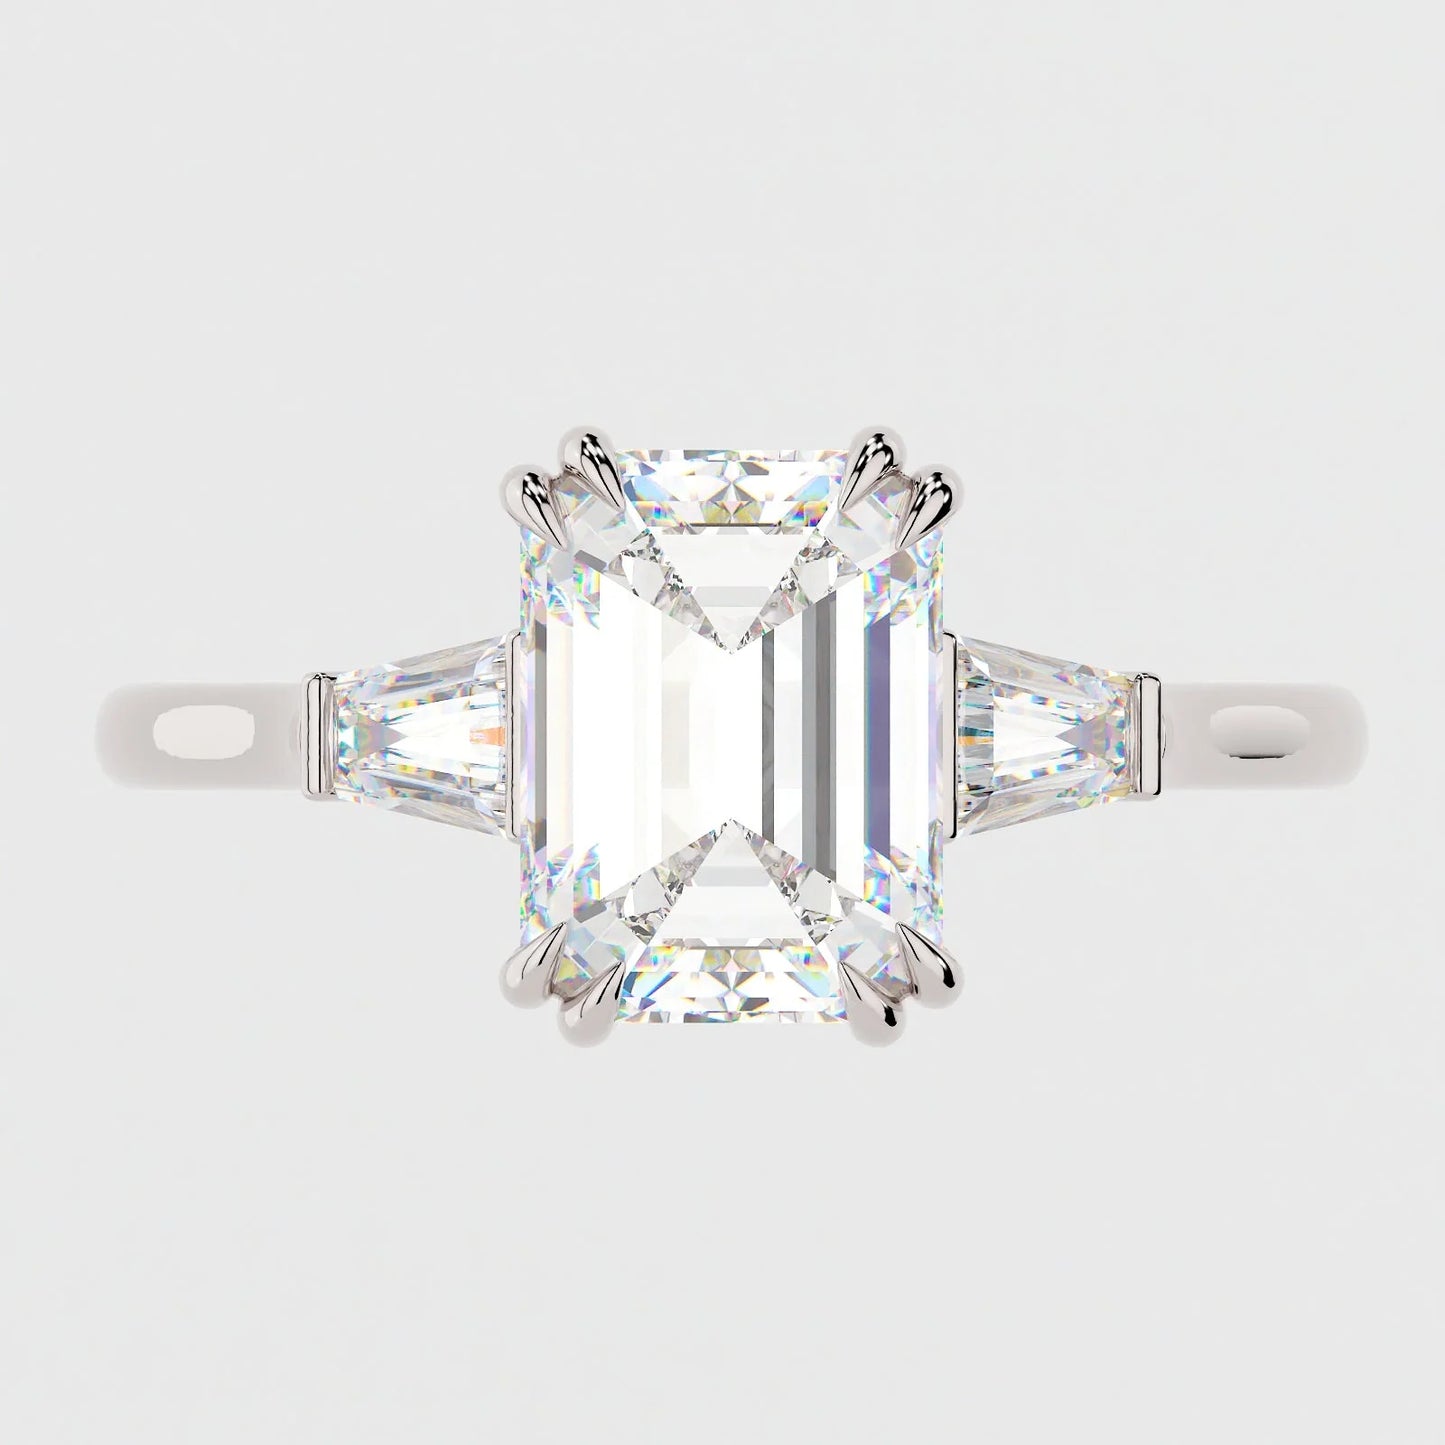 3.5 Carat Emerald Cut Moissanite Diamond Engagement Ring with 3-Stone Setting